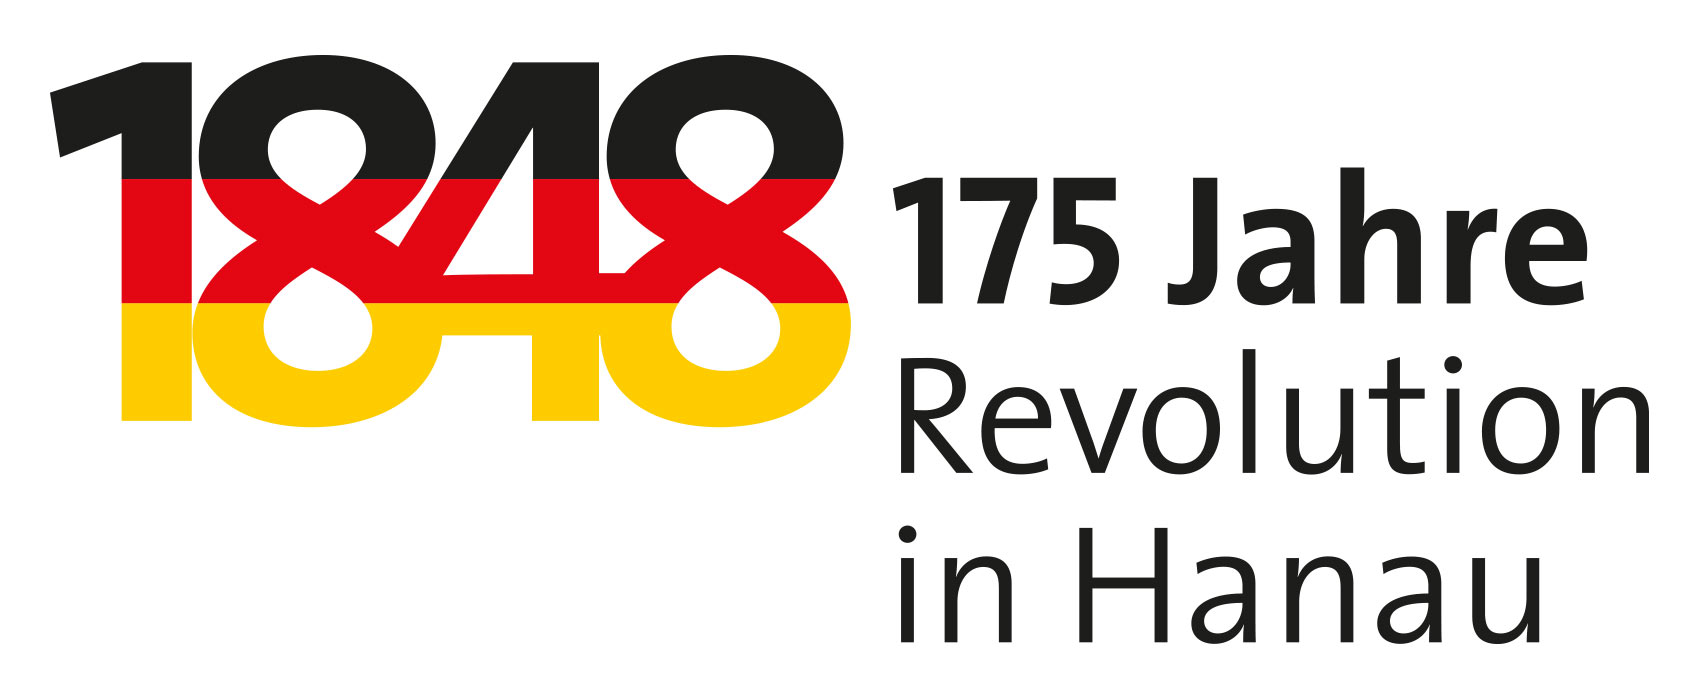 1848 Revolution Hanau